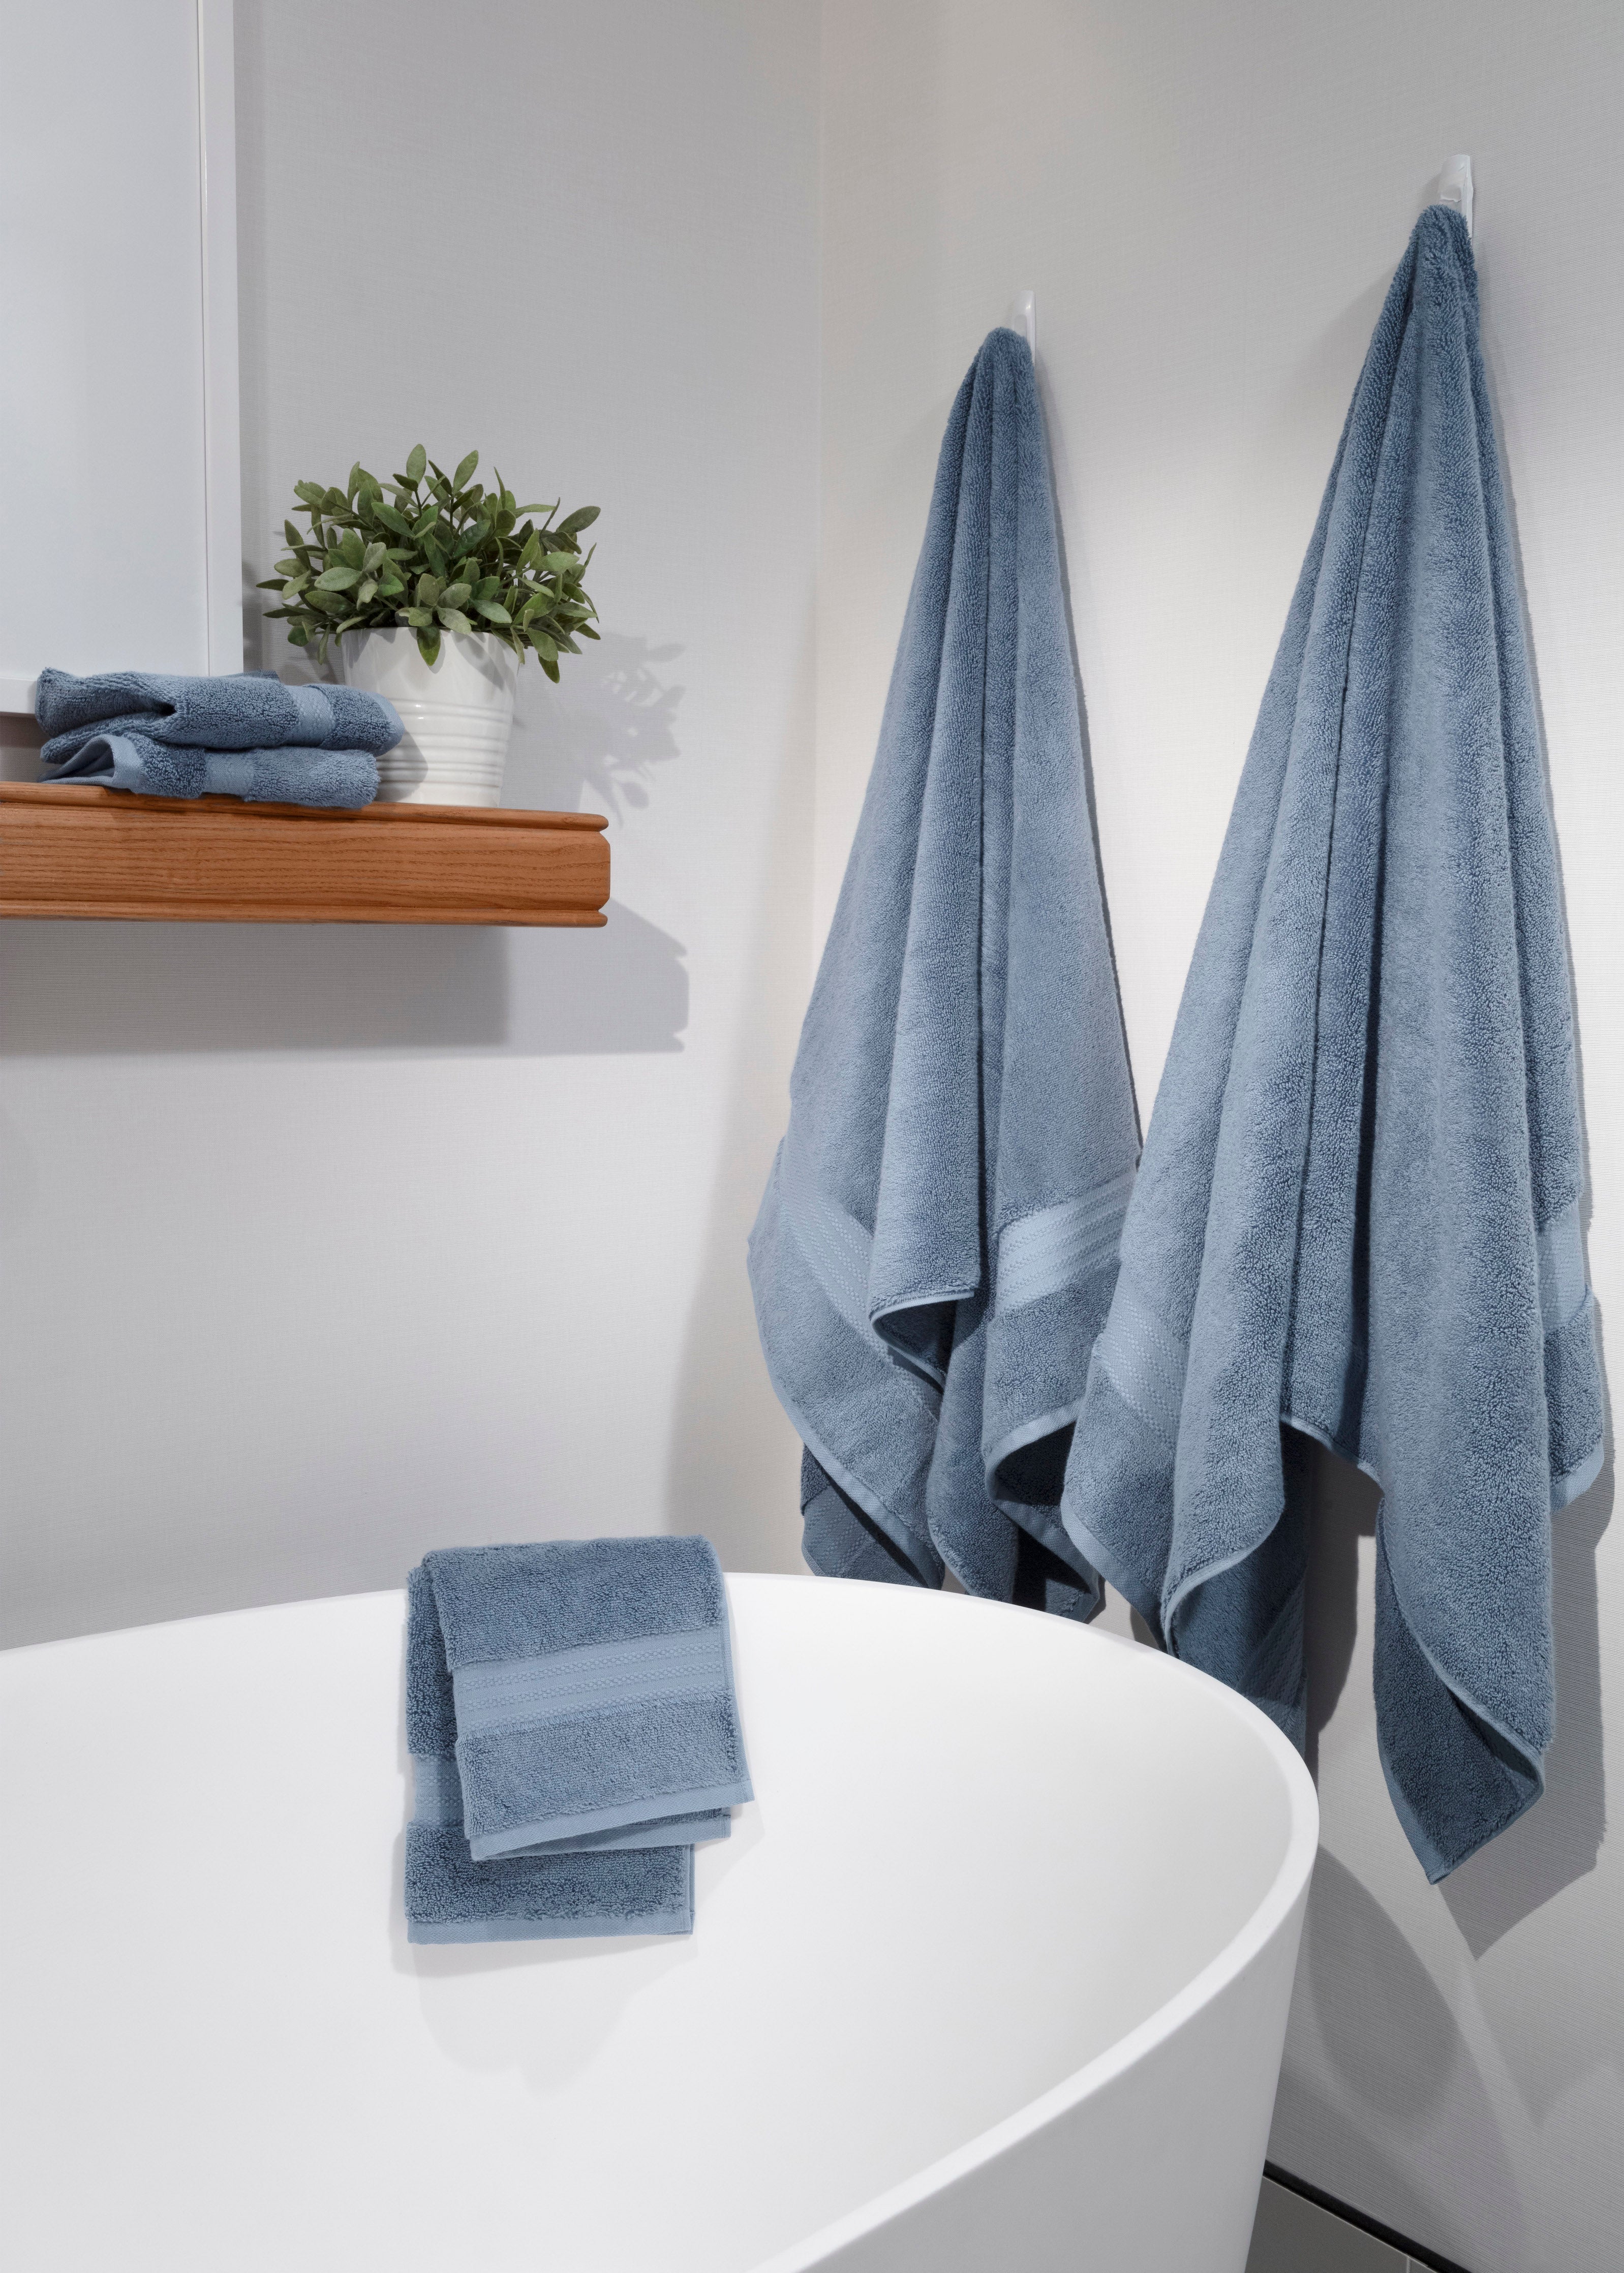 ROOEE Bath Sheet Towel Set. Soft Cotton. Pack of 2. Large 75 x 140 CM